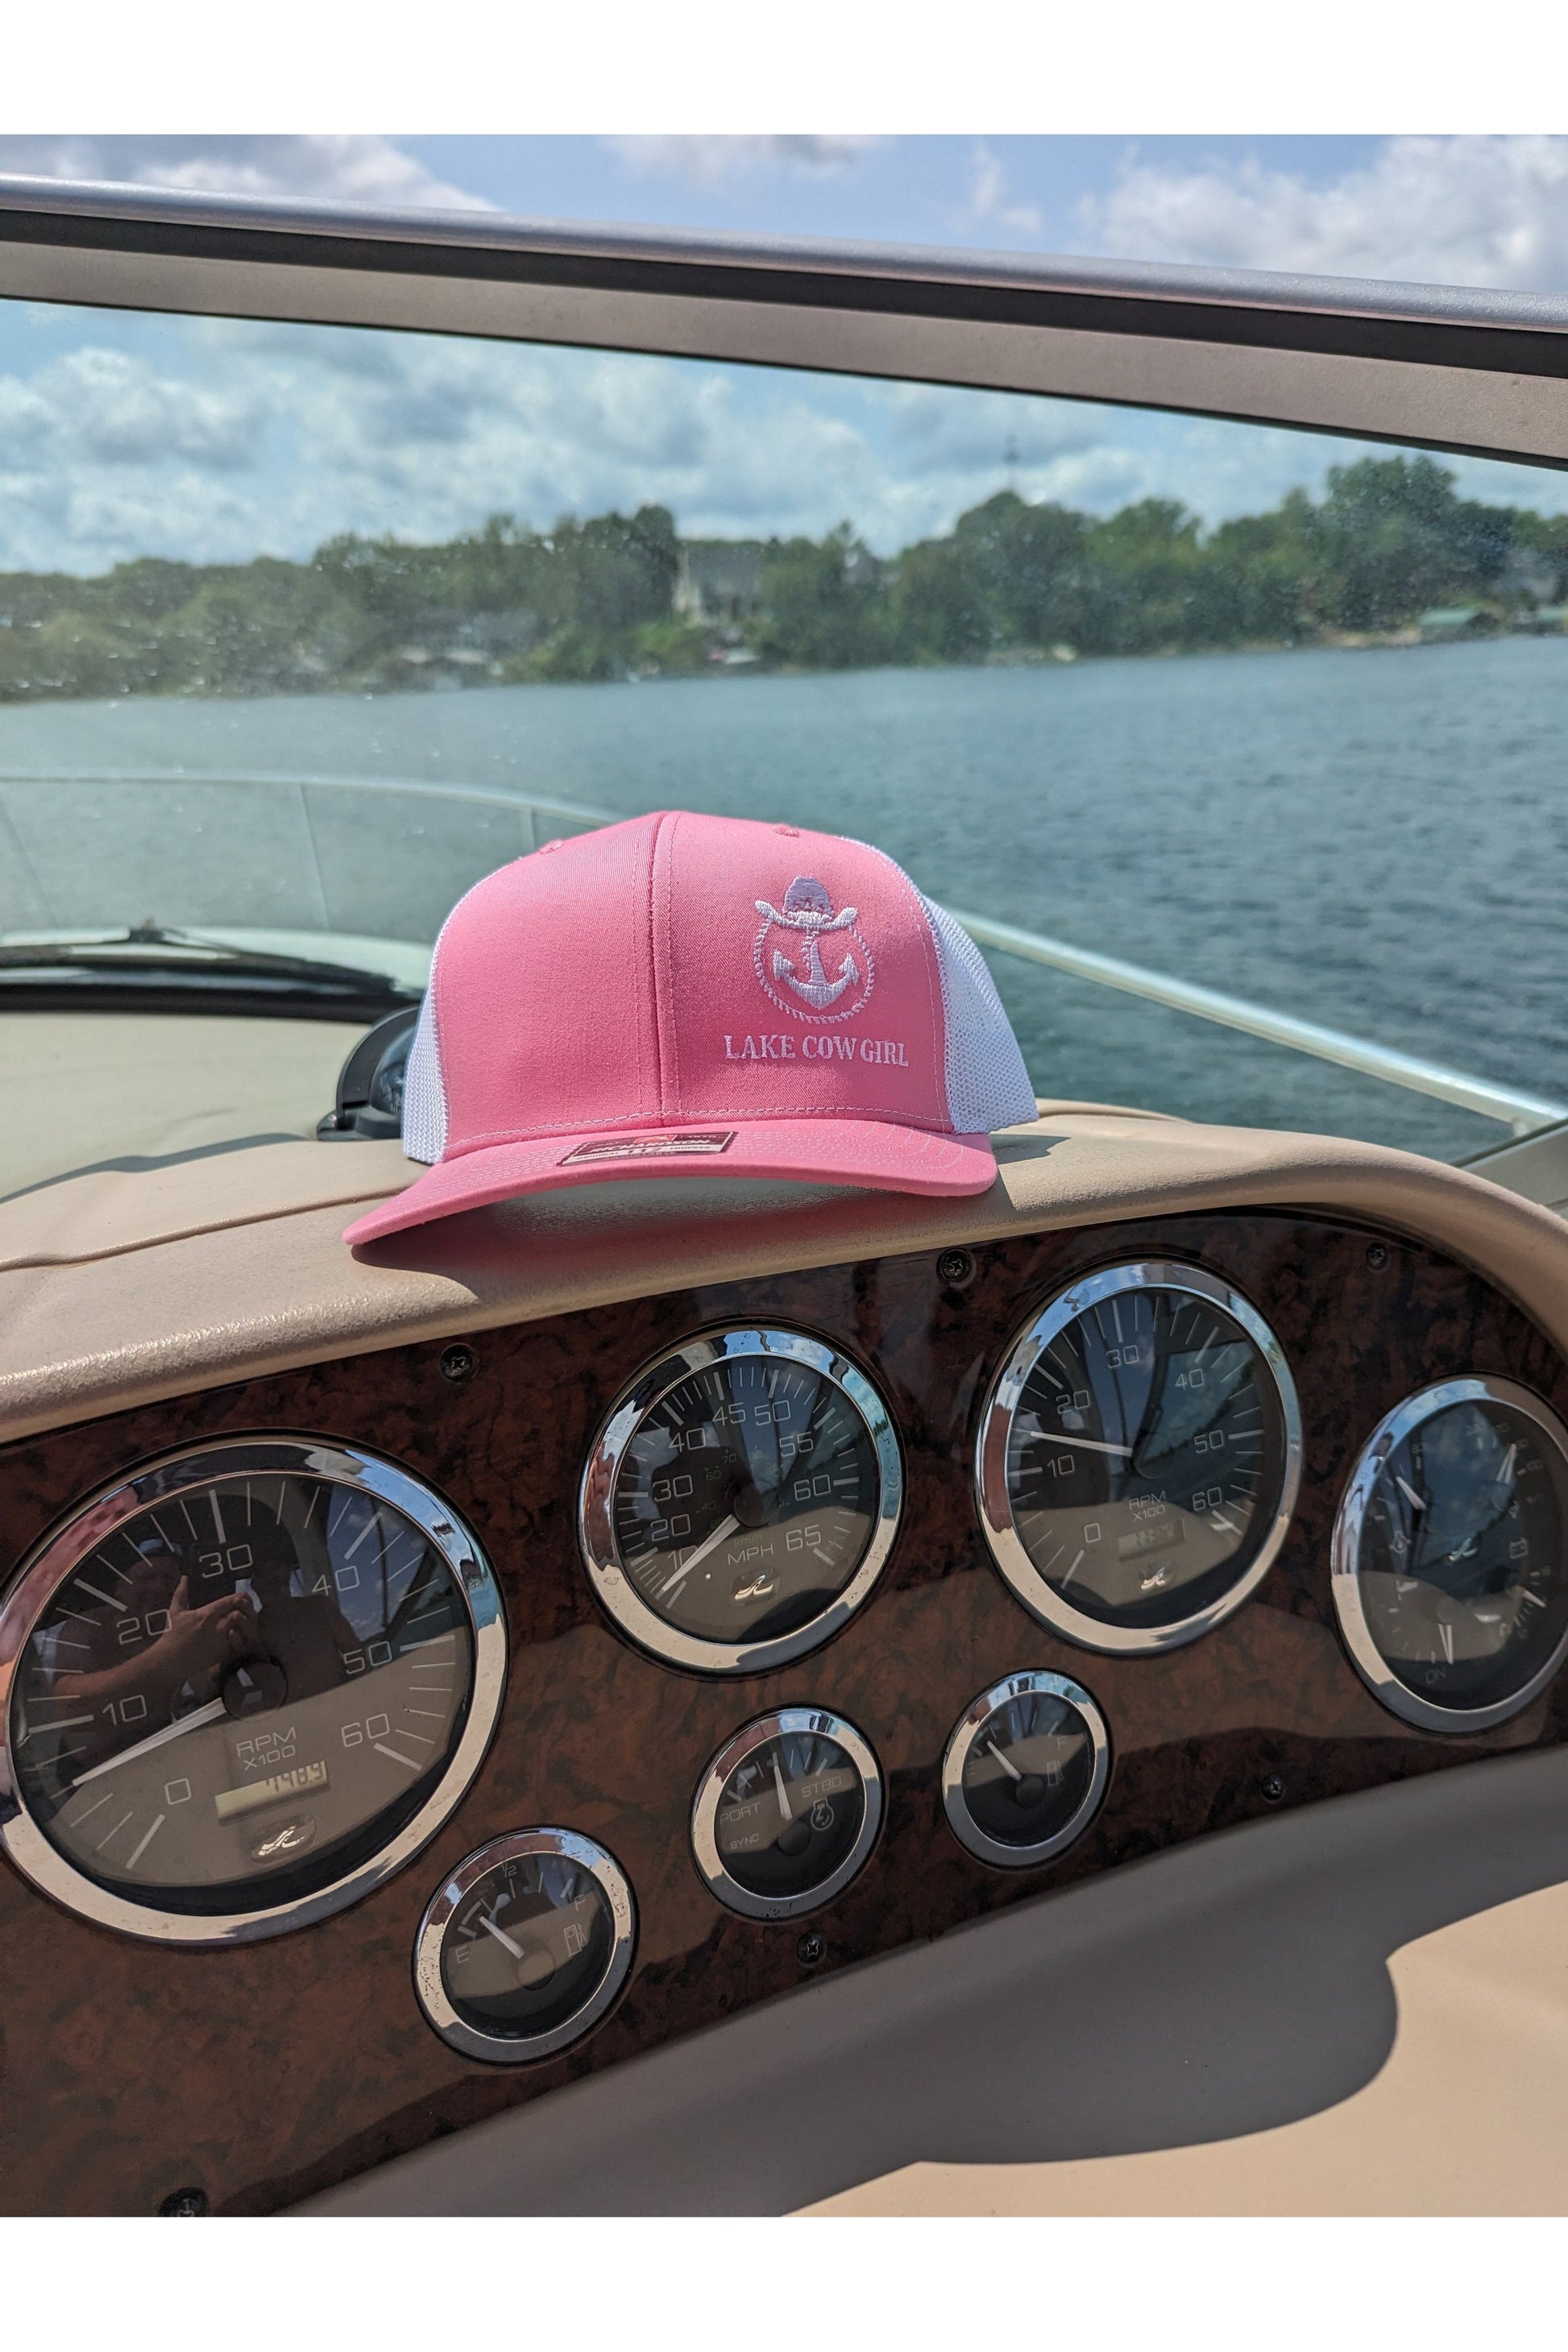 Photo of a Lake Cowgirl Pink Baseball Hat shown sitting atop a boat console. Photo taken on Lake Minnetonka.